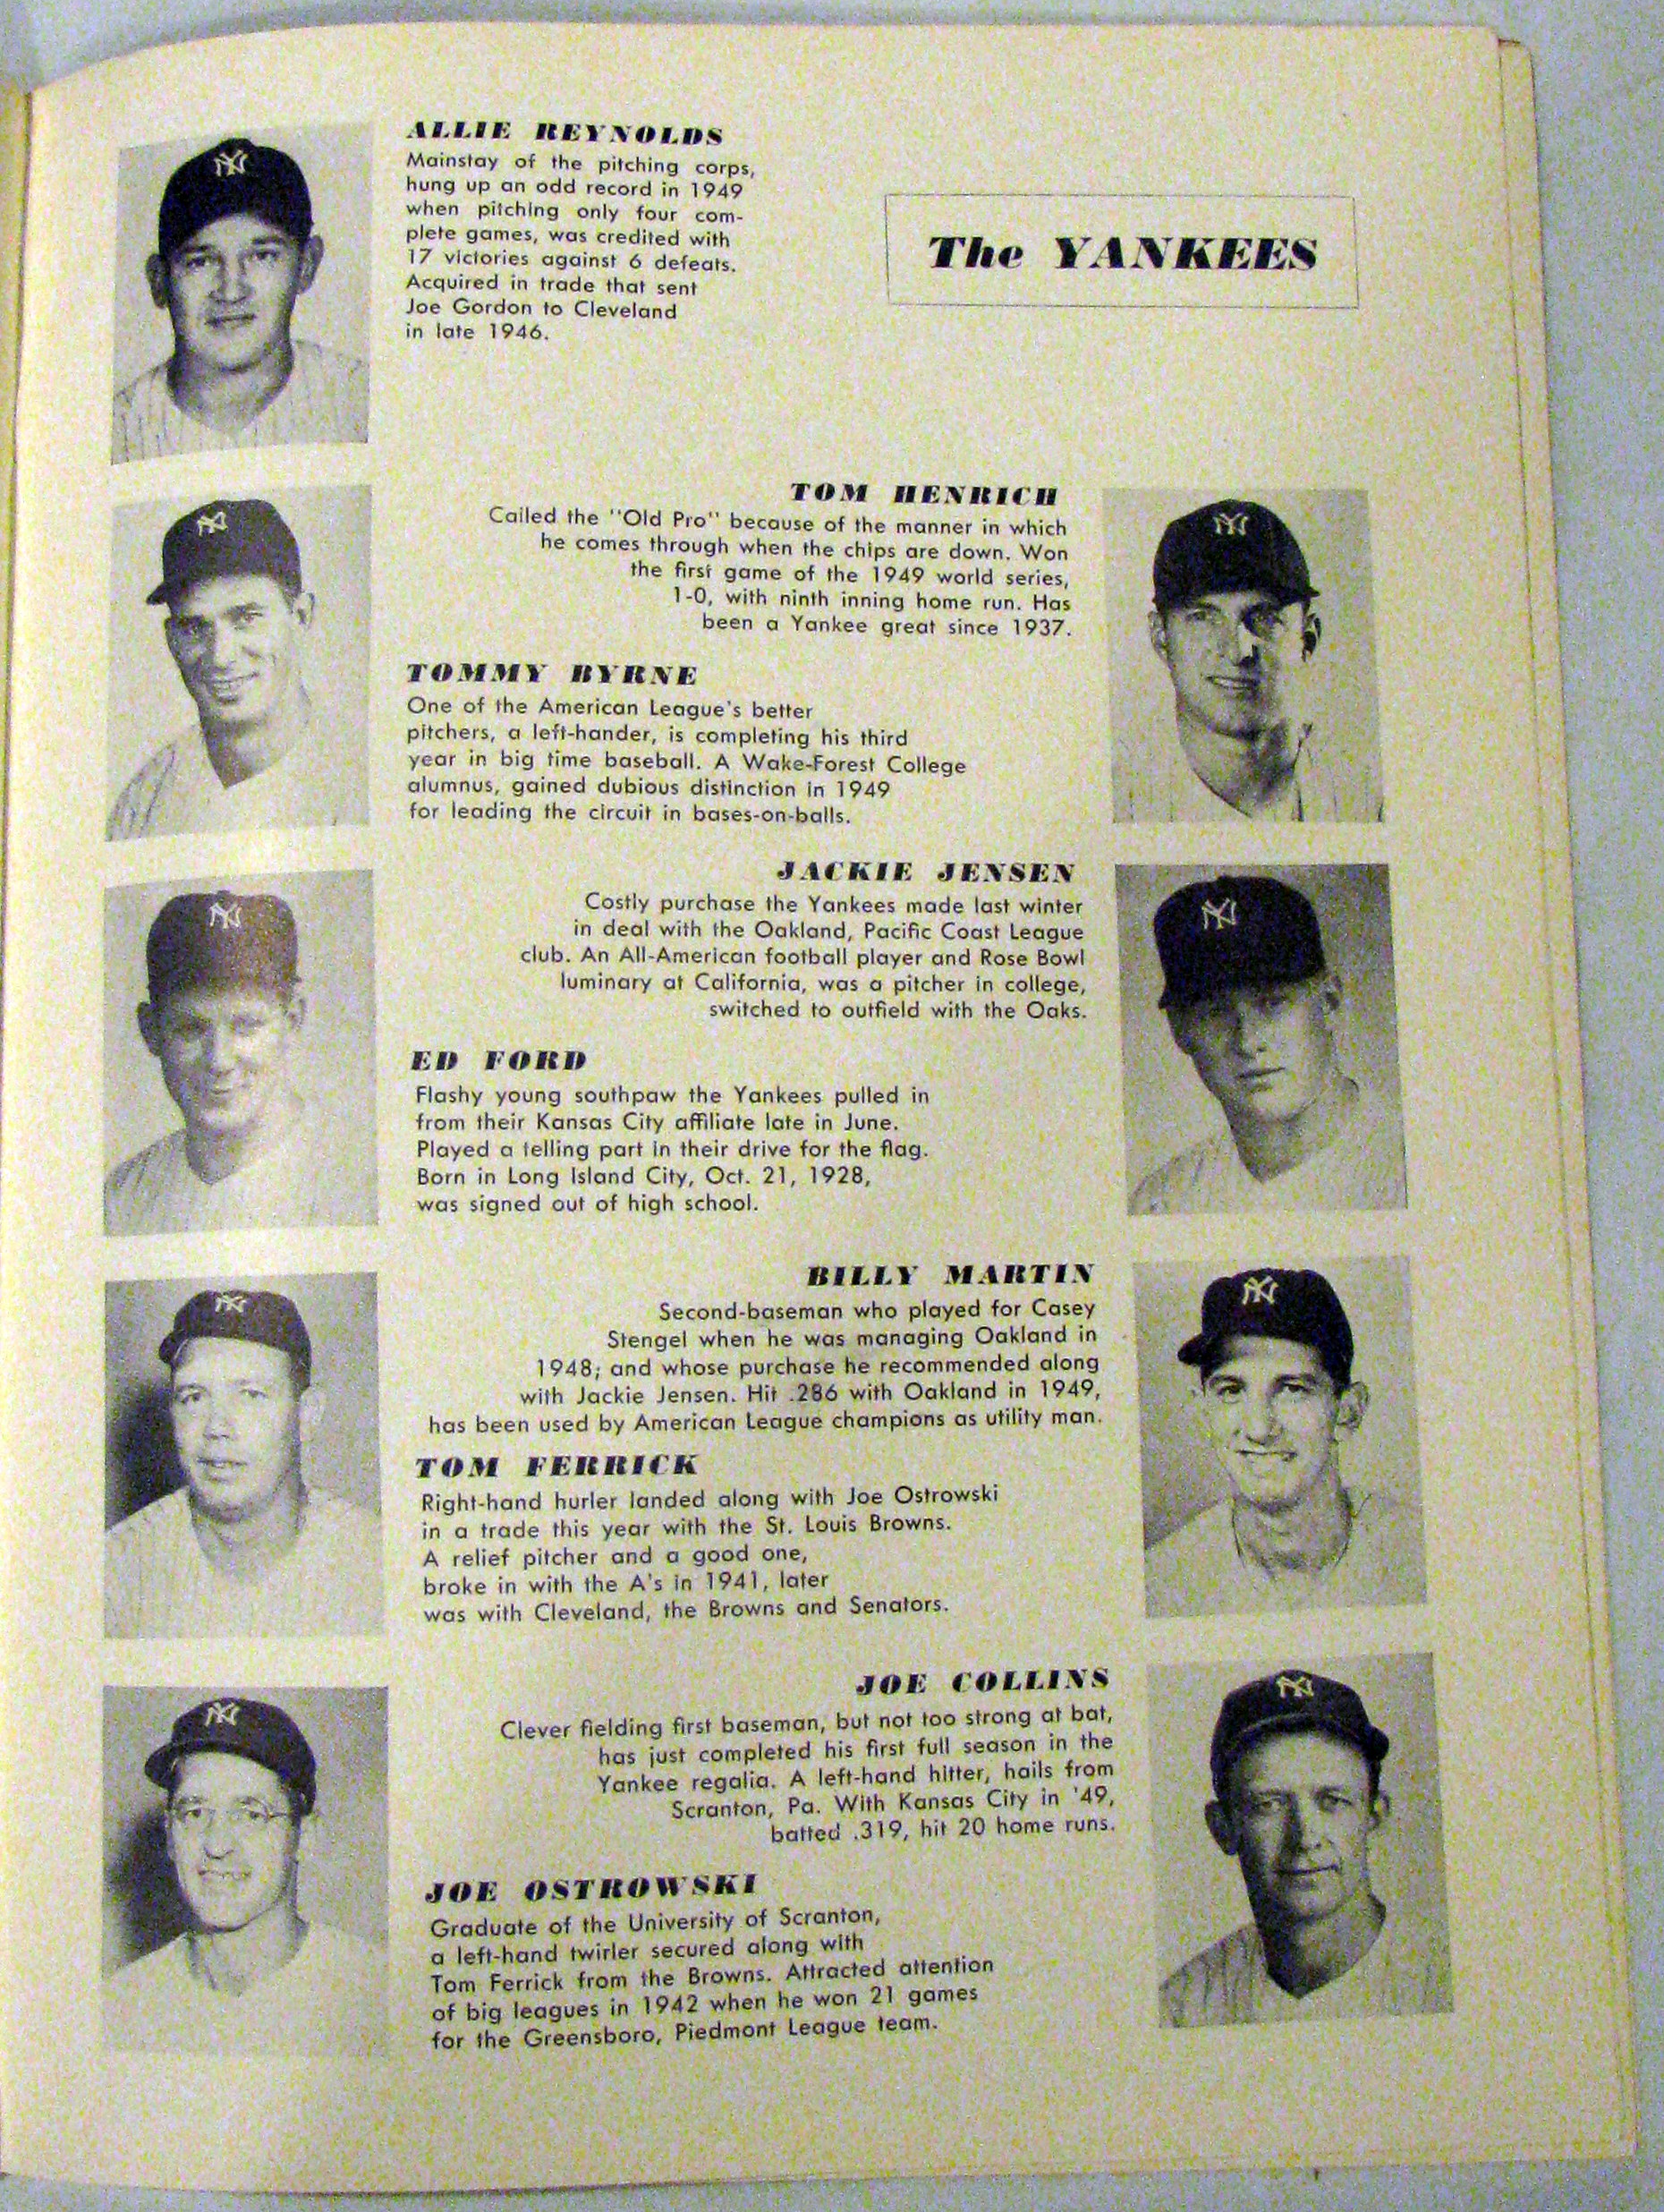 1950 World Series Signed Game Used Baseball Yankees VS. Phillies